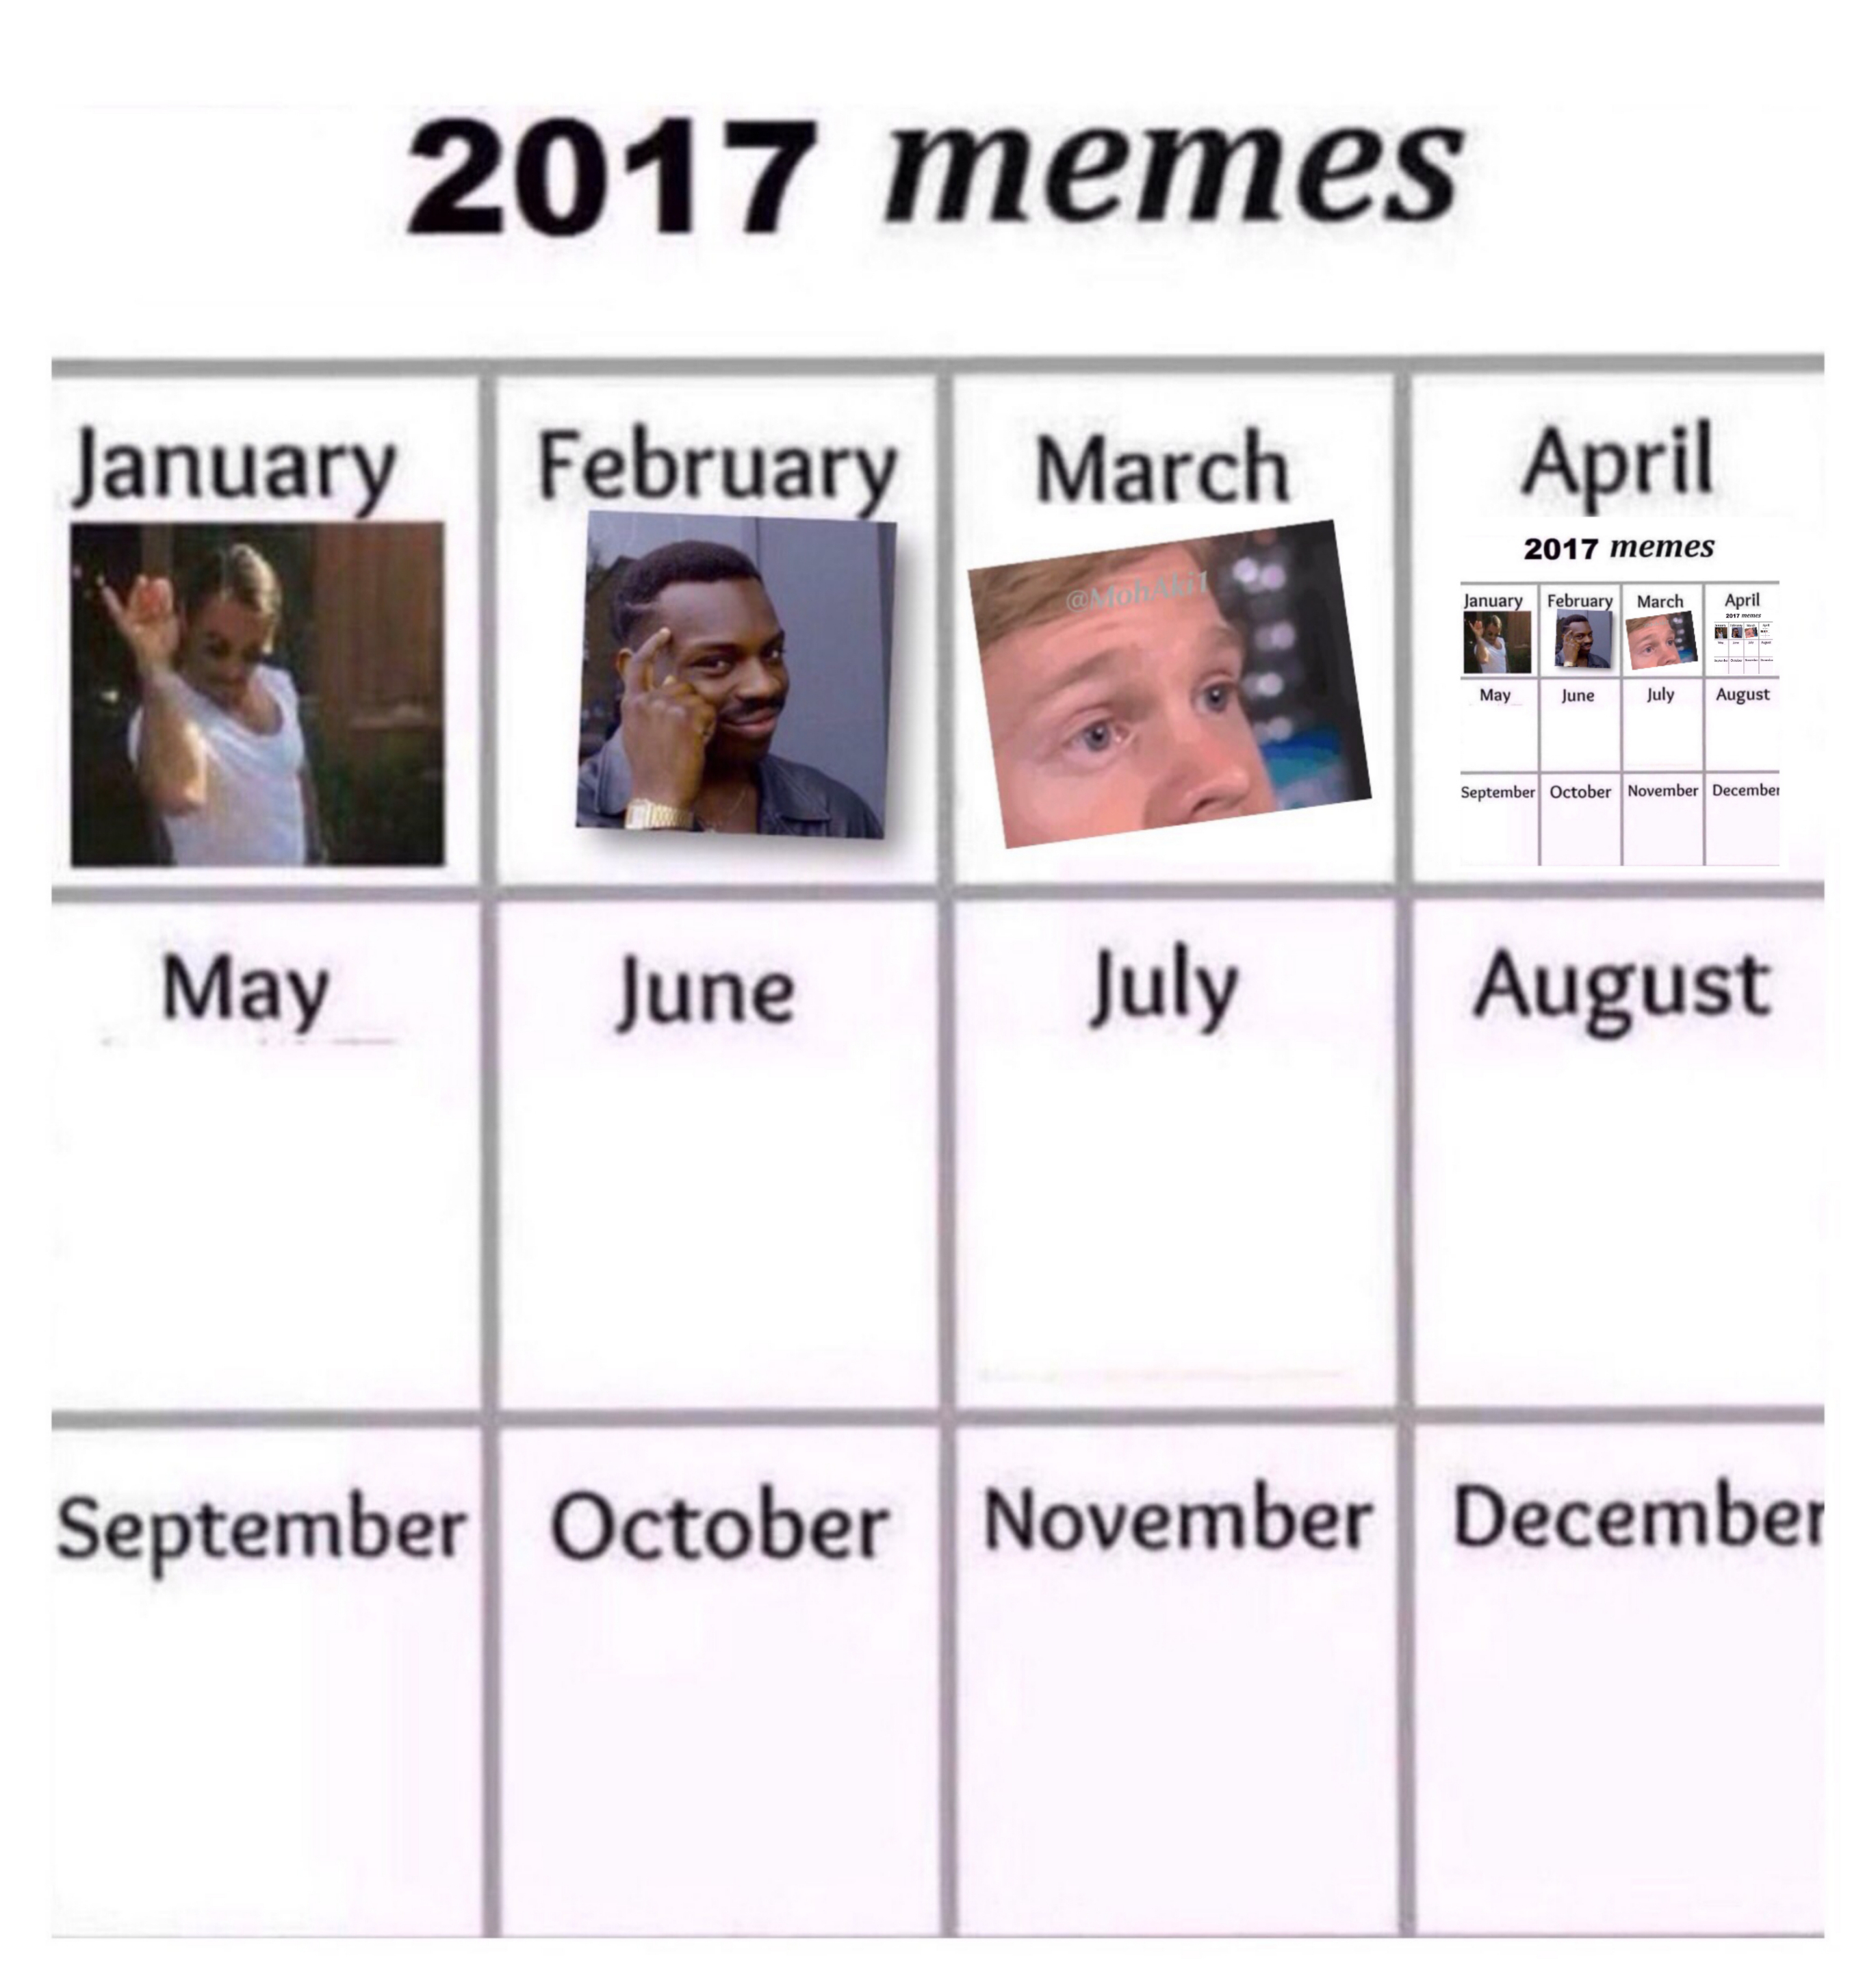 memes of every month 2017 - 2017 memes January February March memes May June July August September October November December